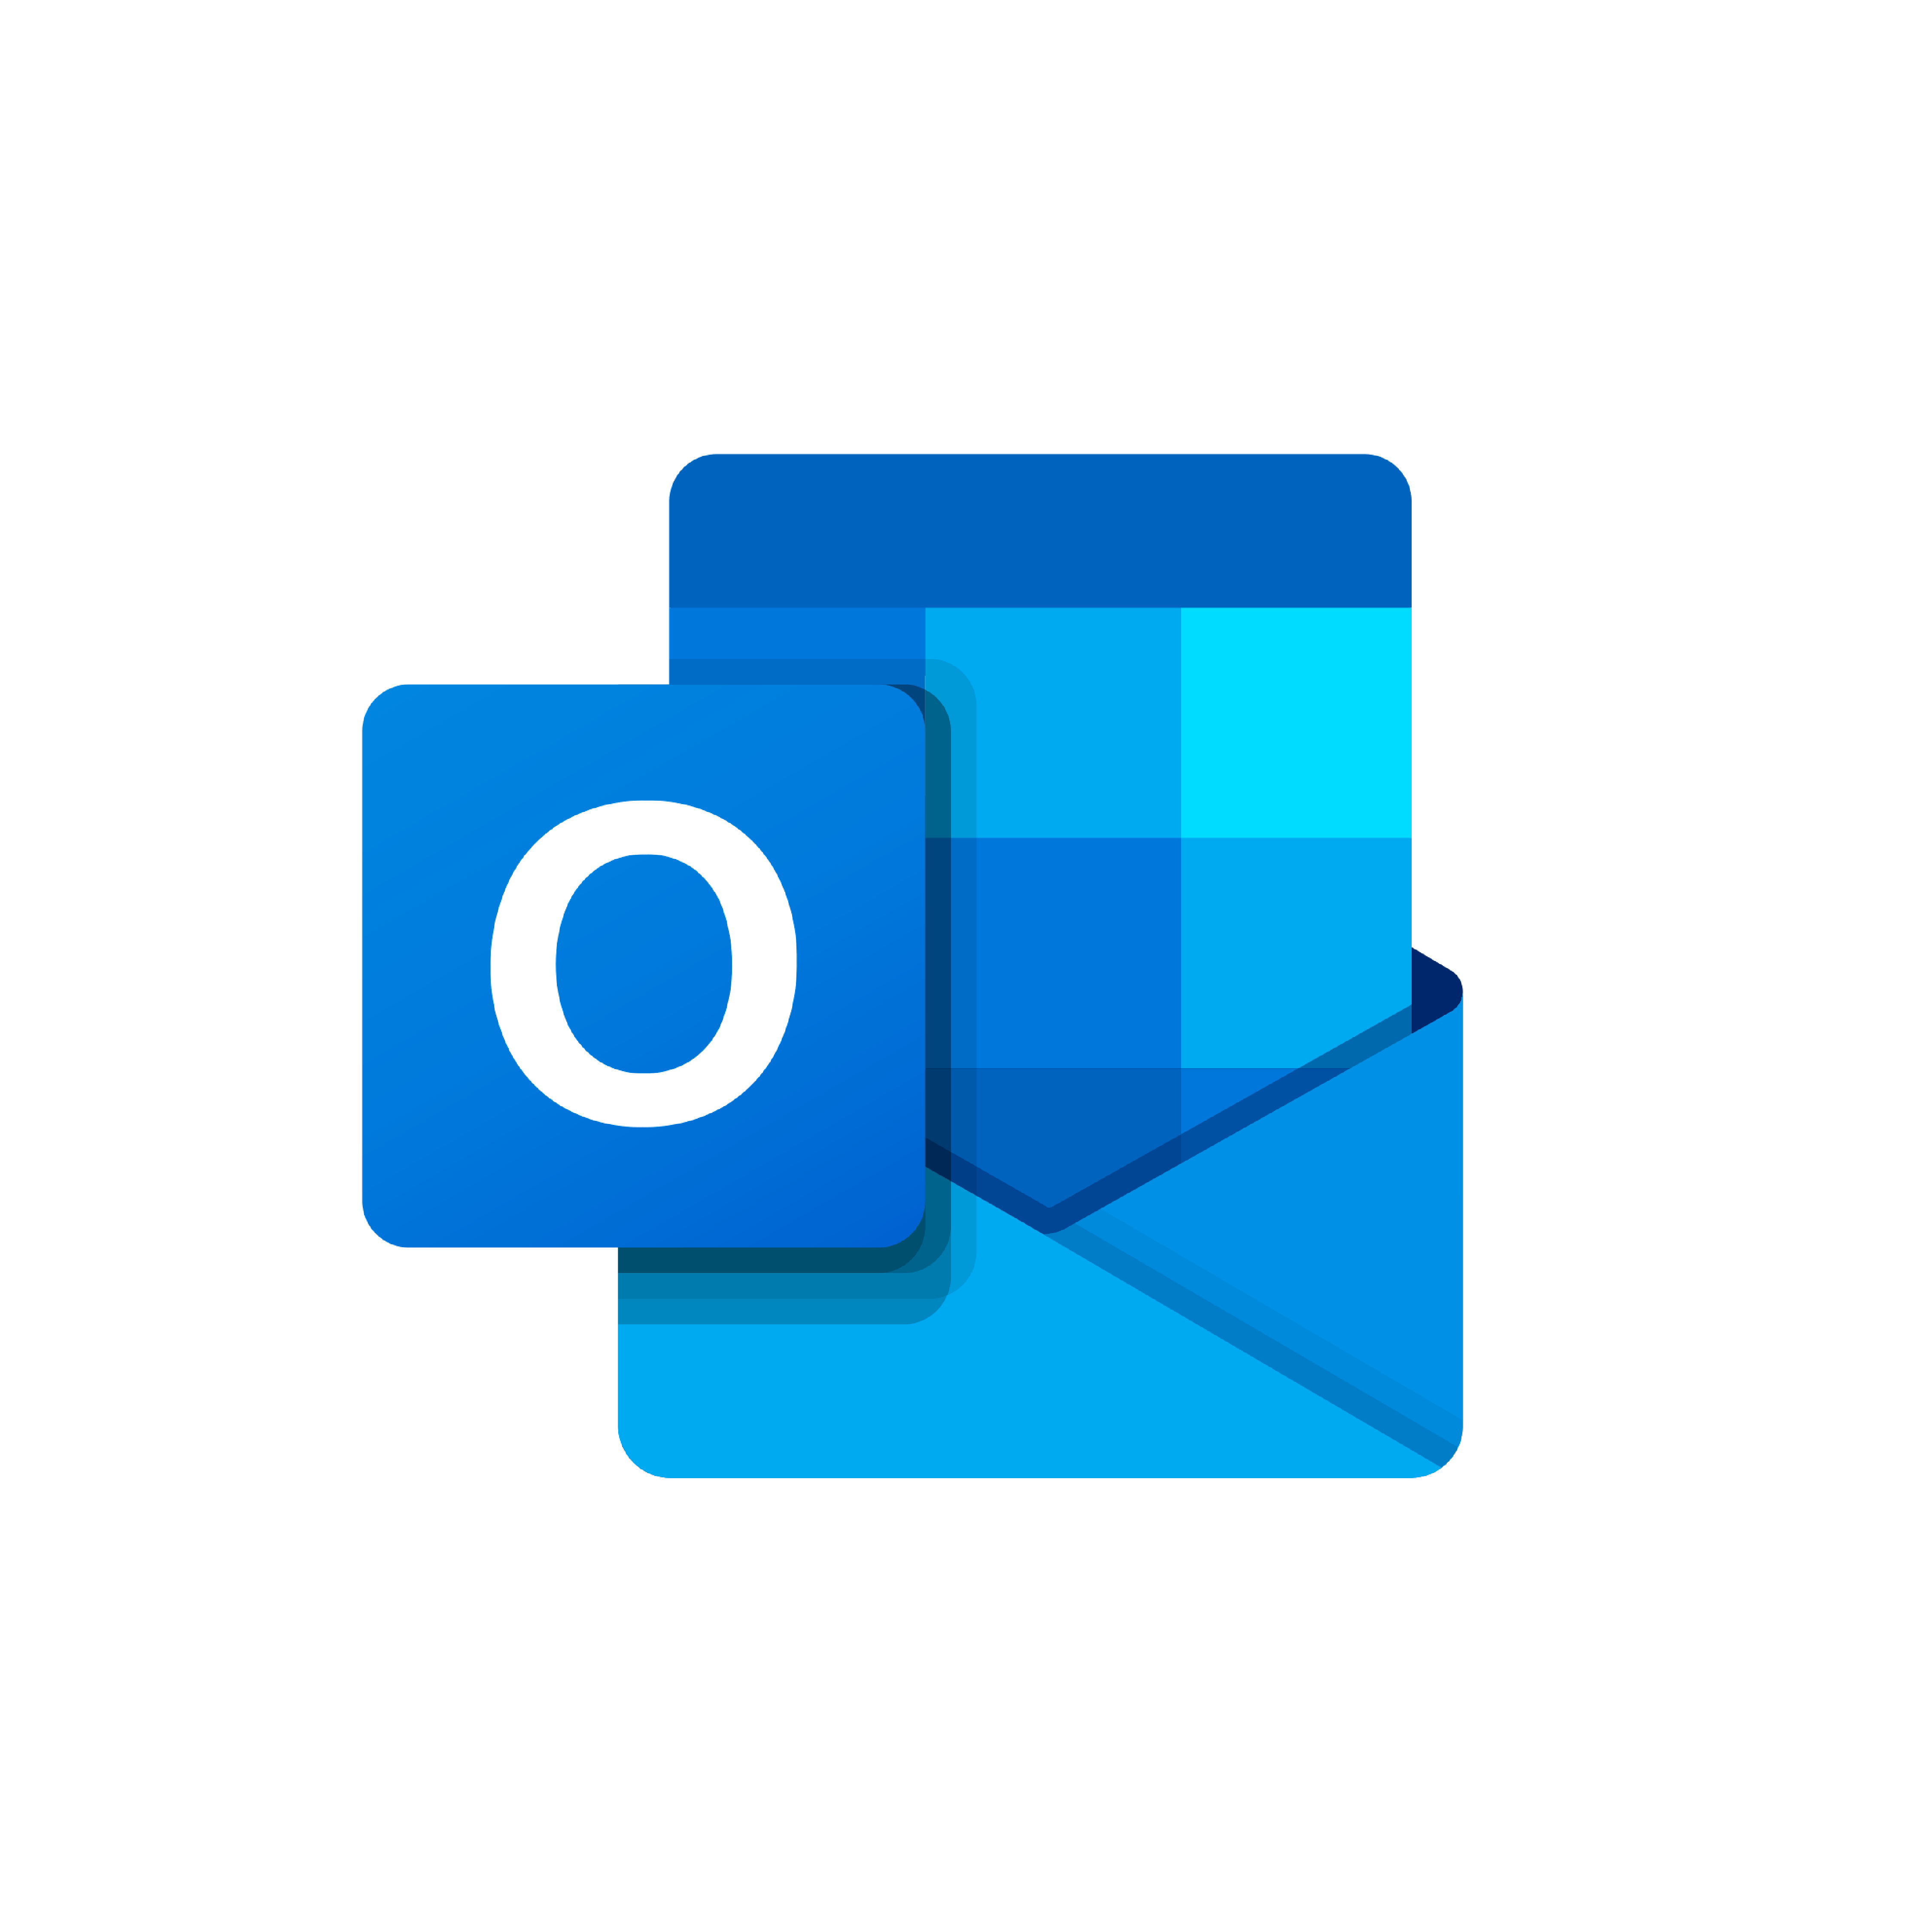 Microsoft Outlook logo test-05